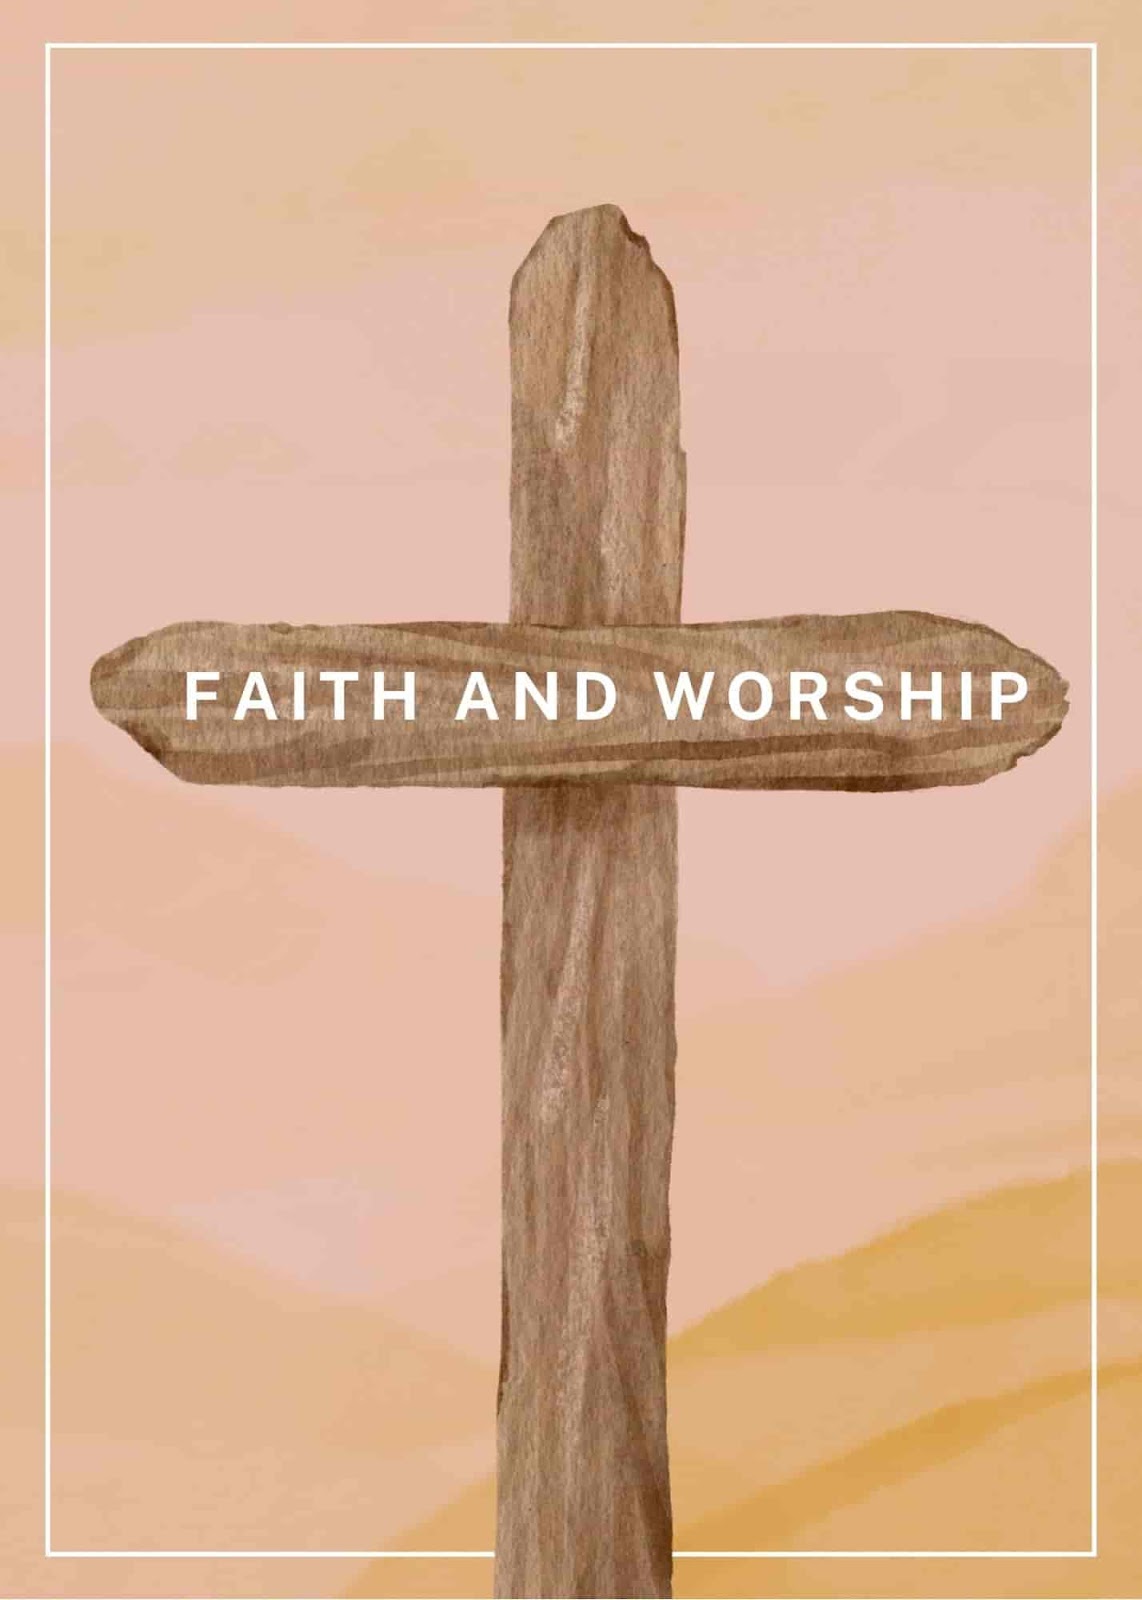 Inspiring Christian Bio for Instagram - Faith and Worship Bios